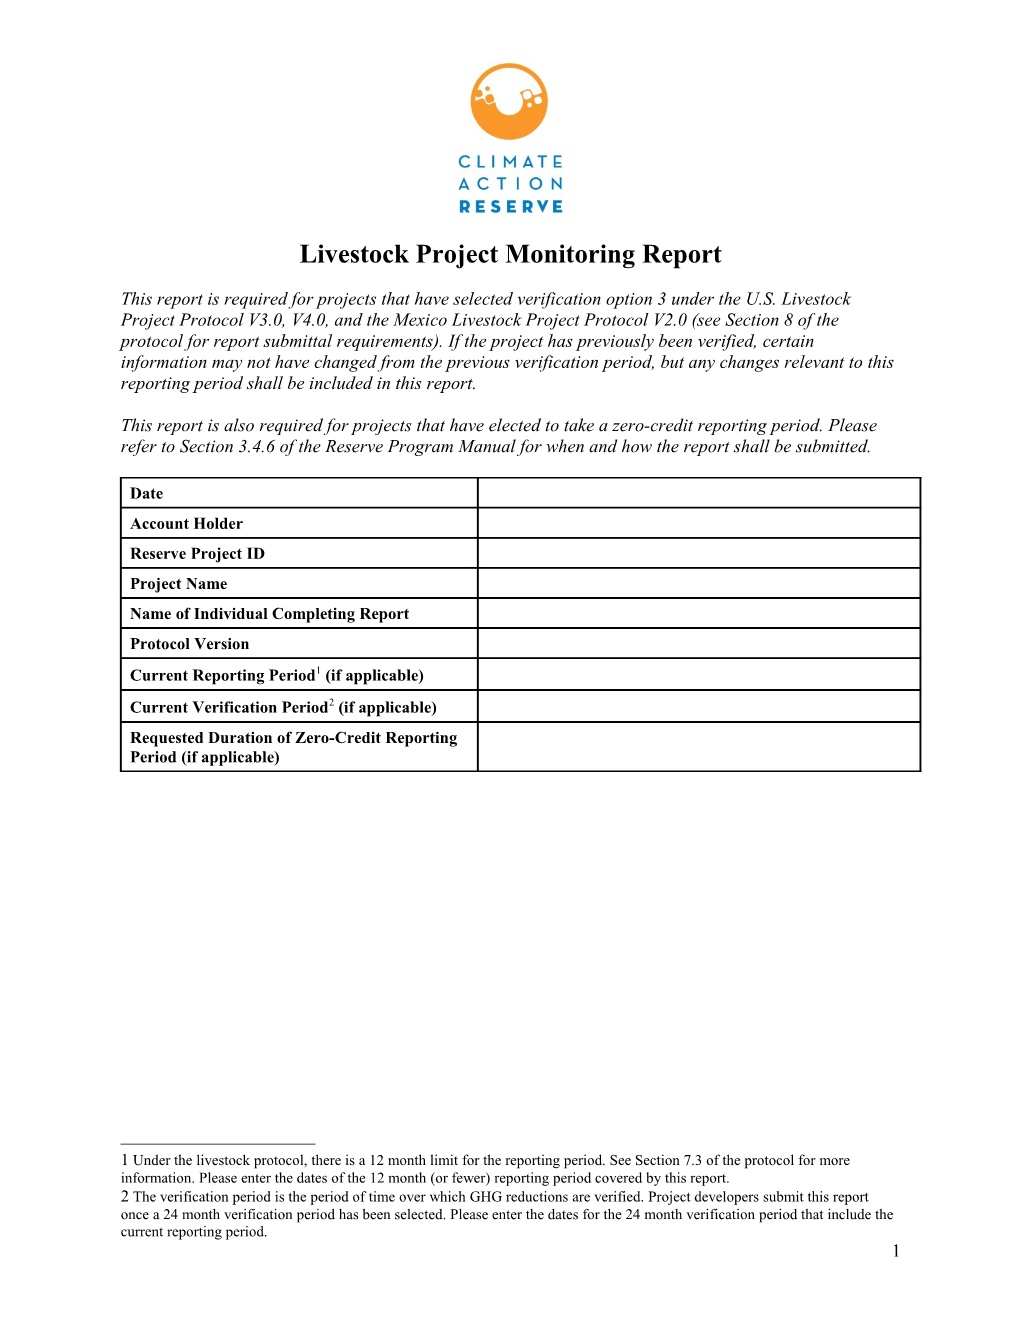 Livestock Project Monitoring Report September 2015